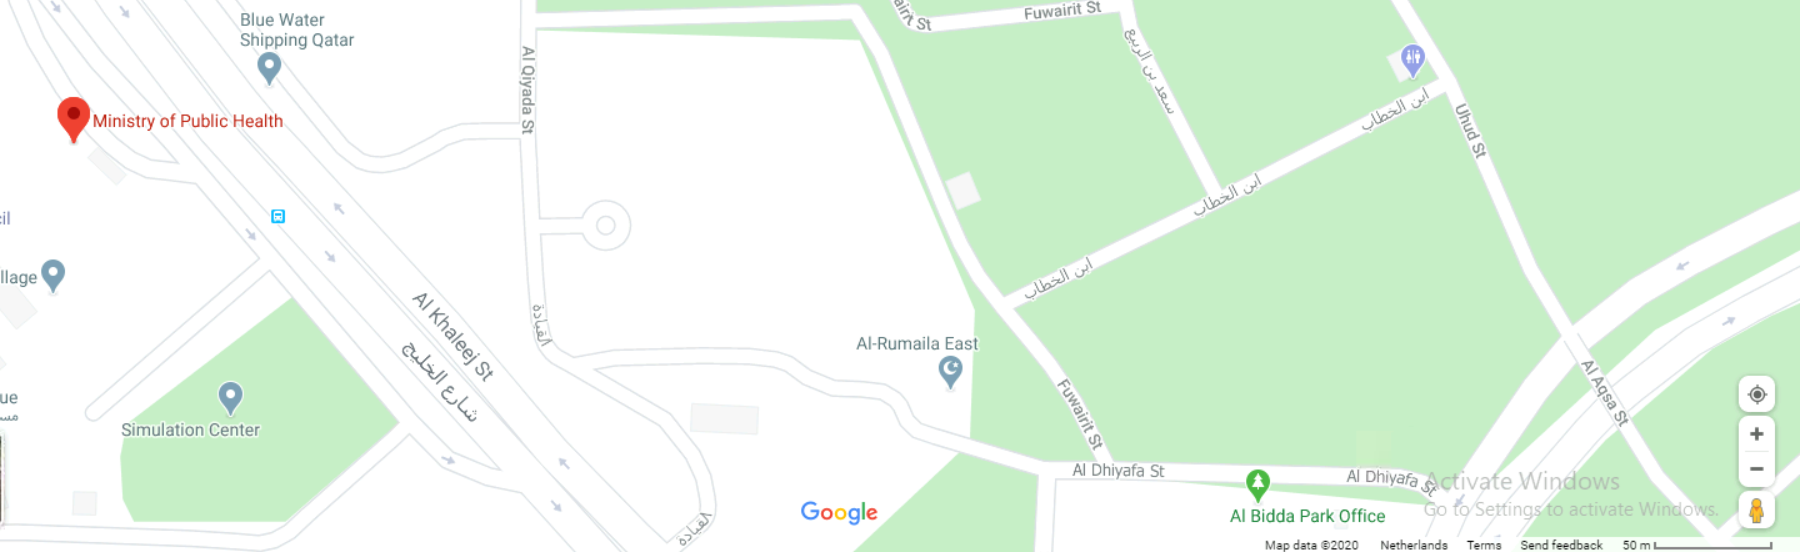 Qatar Ministry of Public Health, Headquarters location on Google Map